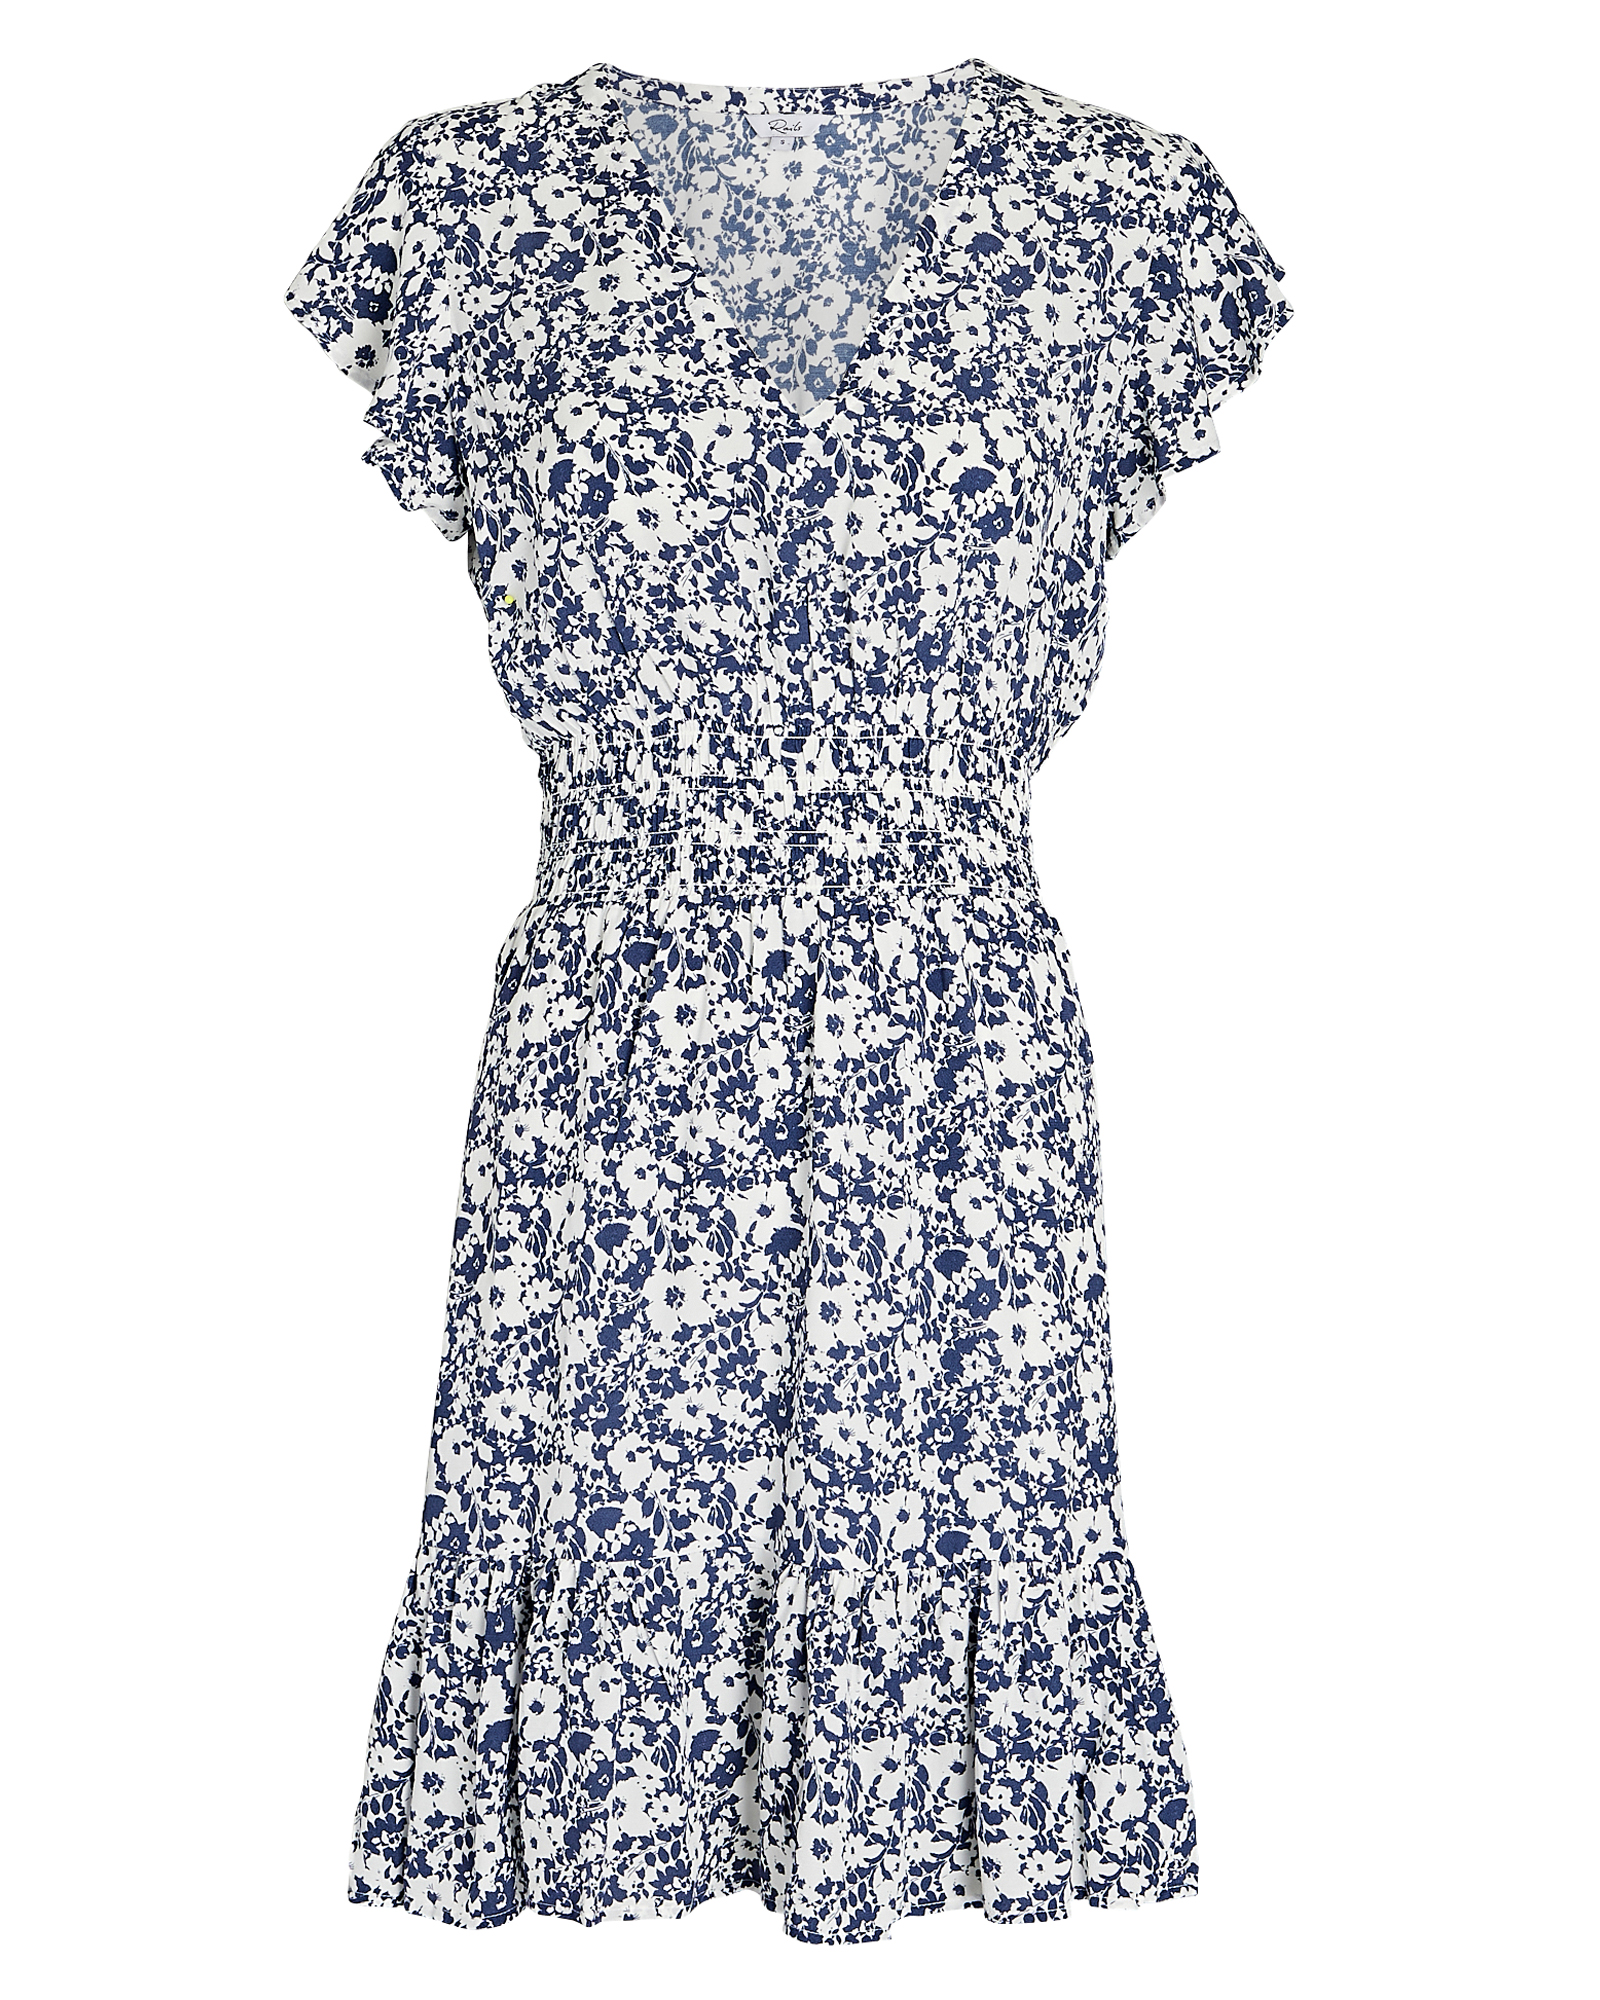 Rails Tara Flutter Sleeve Mini Dress in Blue and White | INTERMIX®